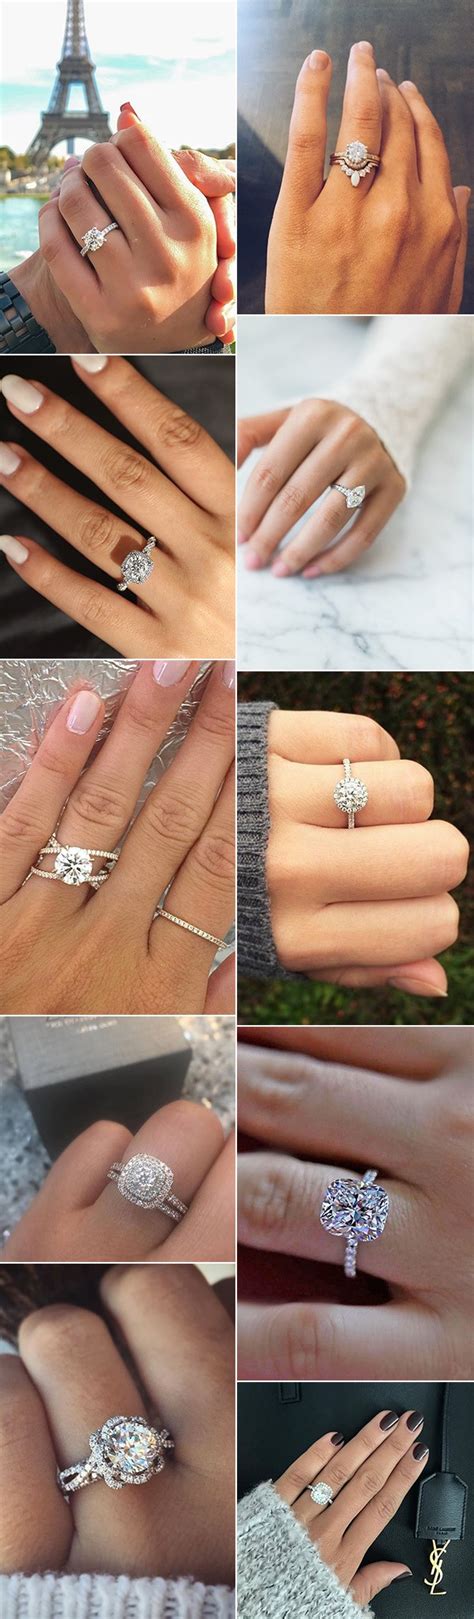 20 Top Wedding Engagement Ring Ideas Emmalovesweddings